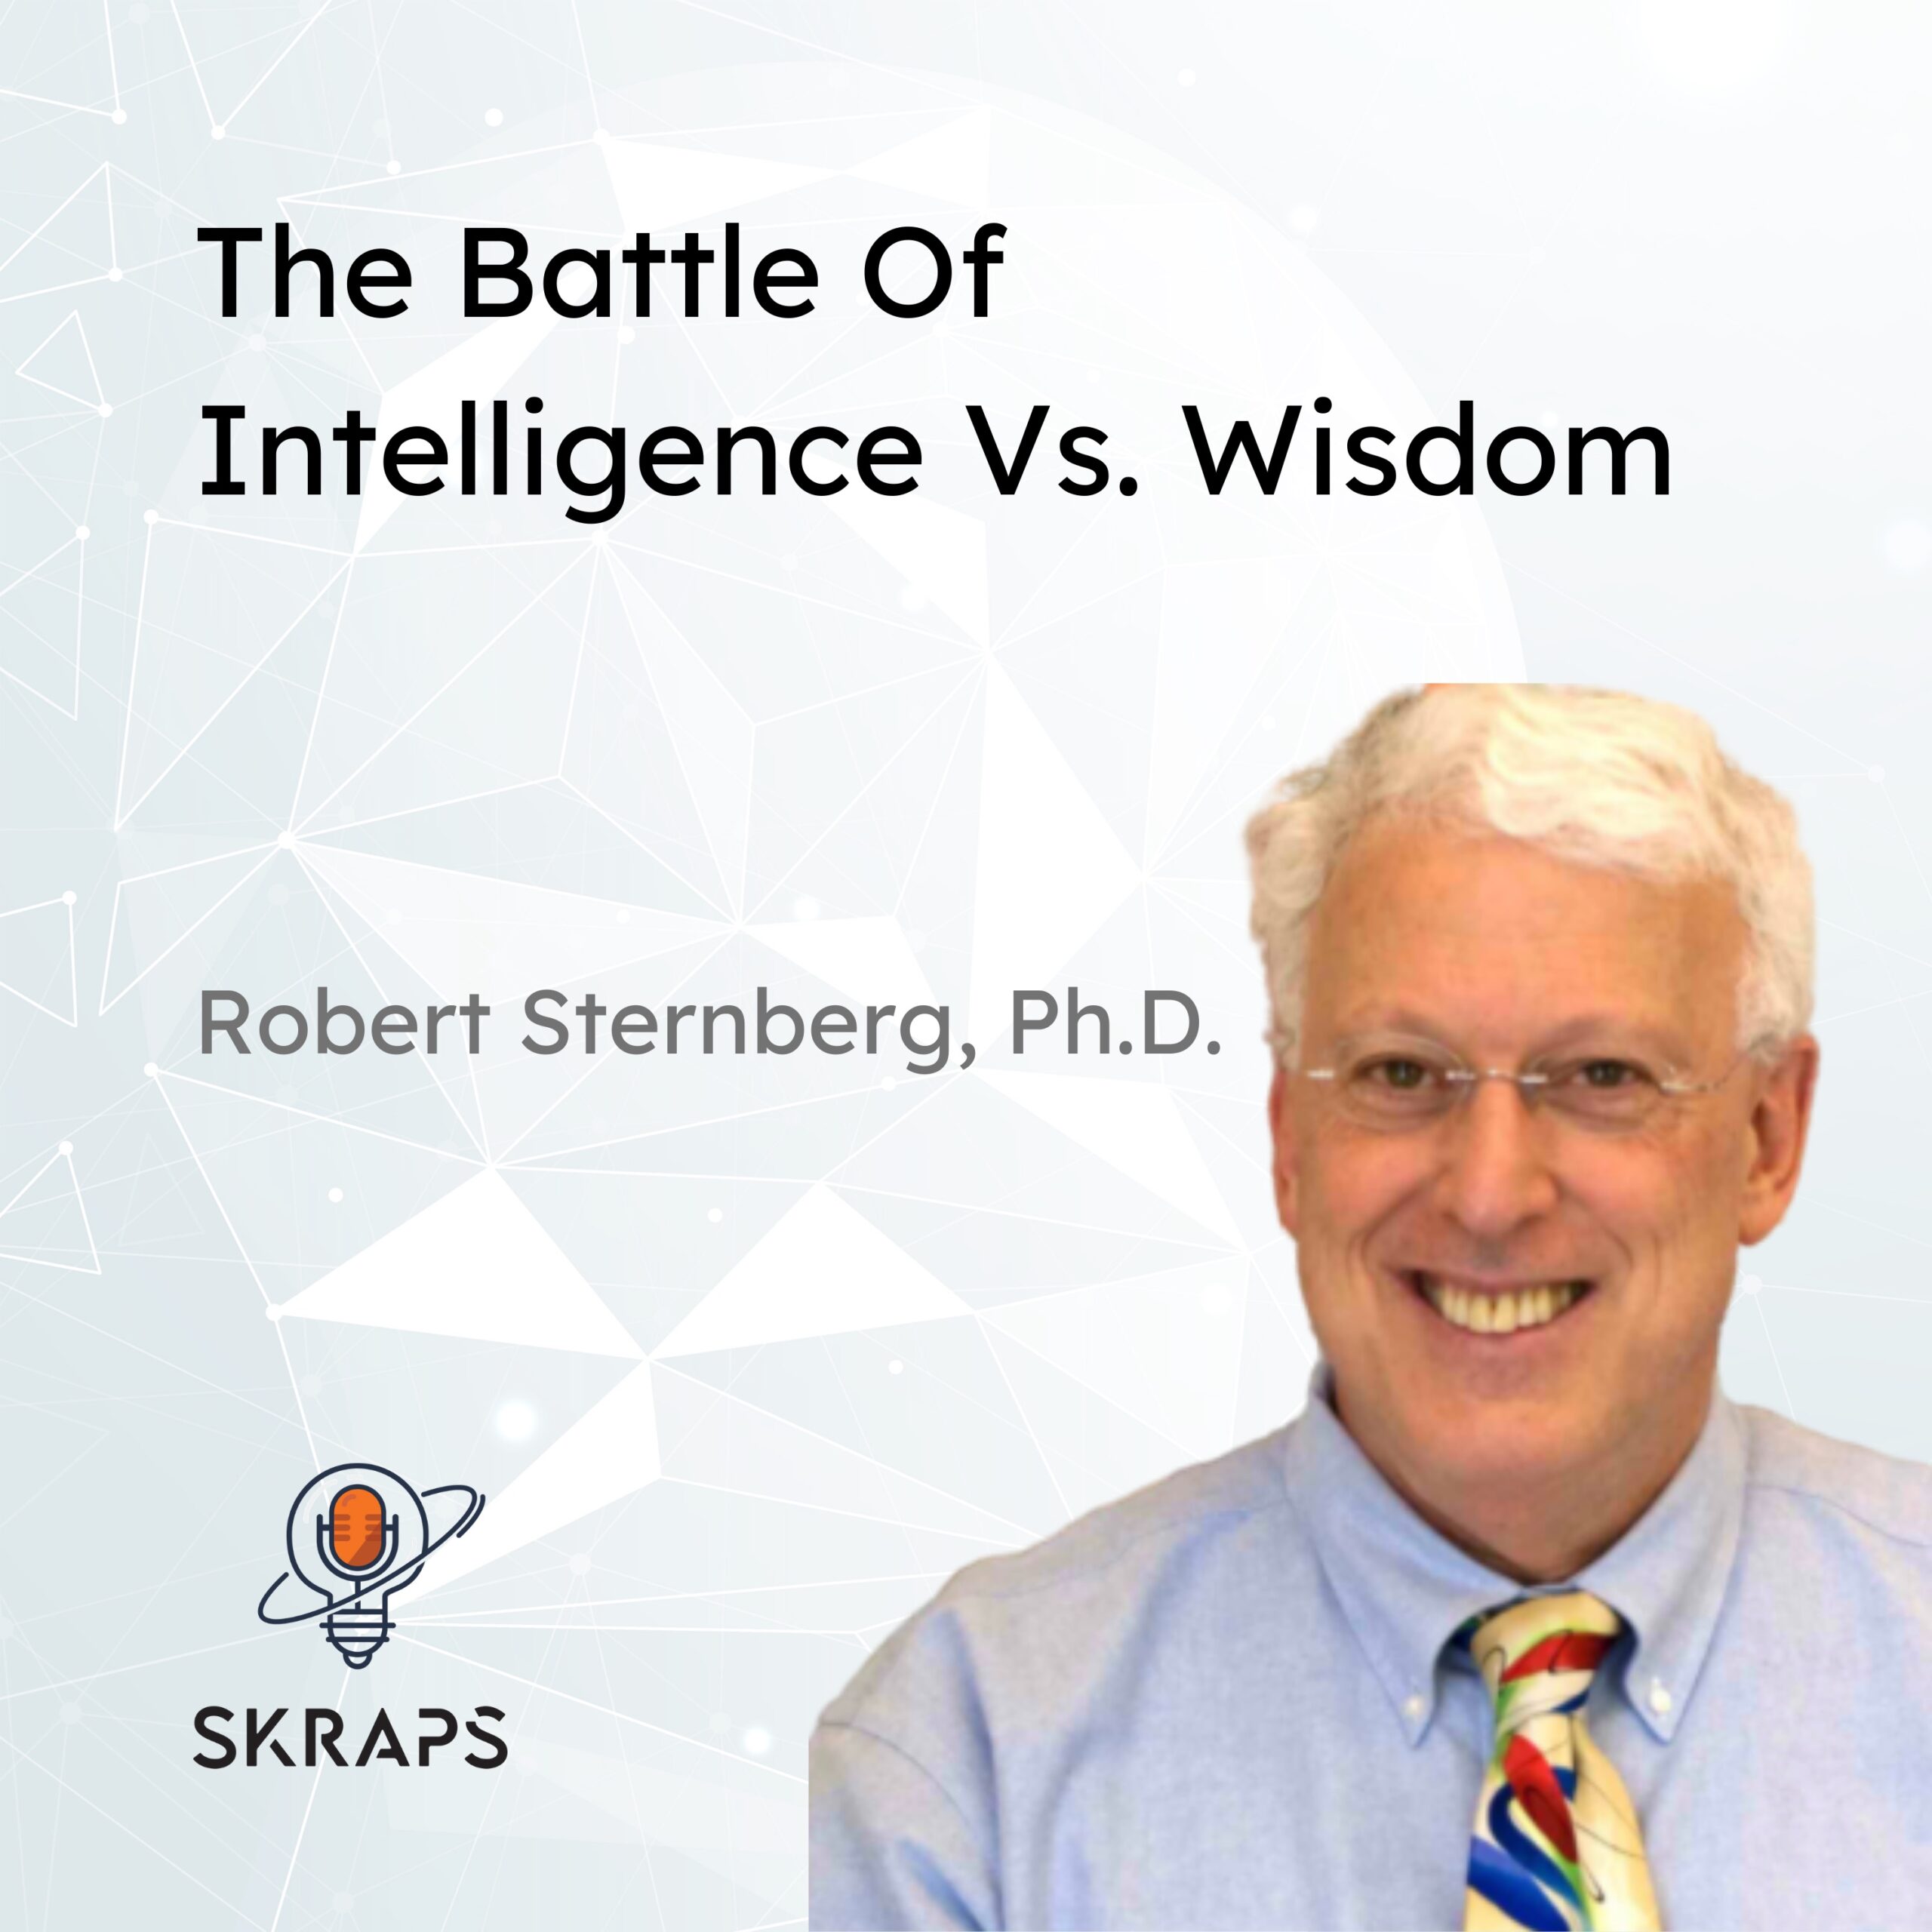 The Battle of Intelligence Vs. Wisdom